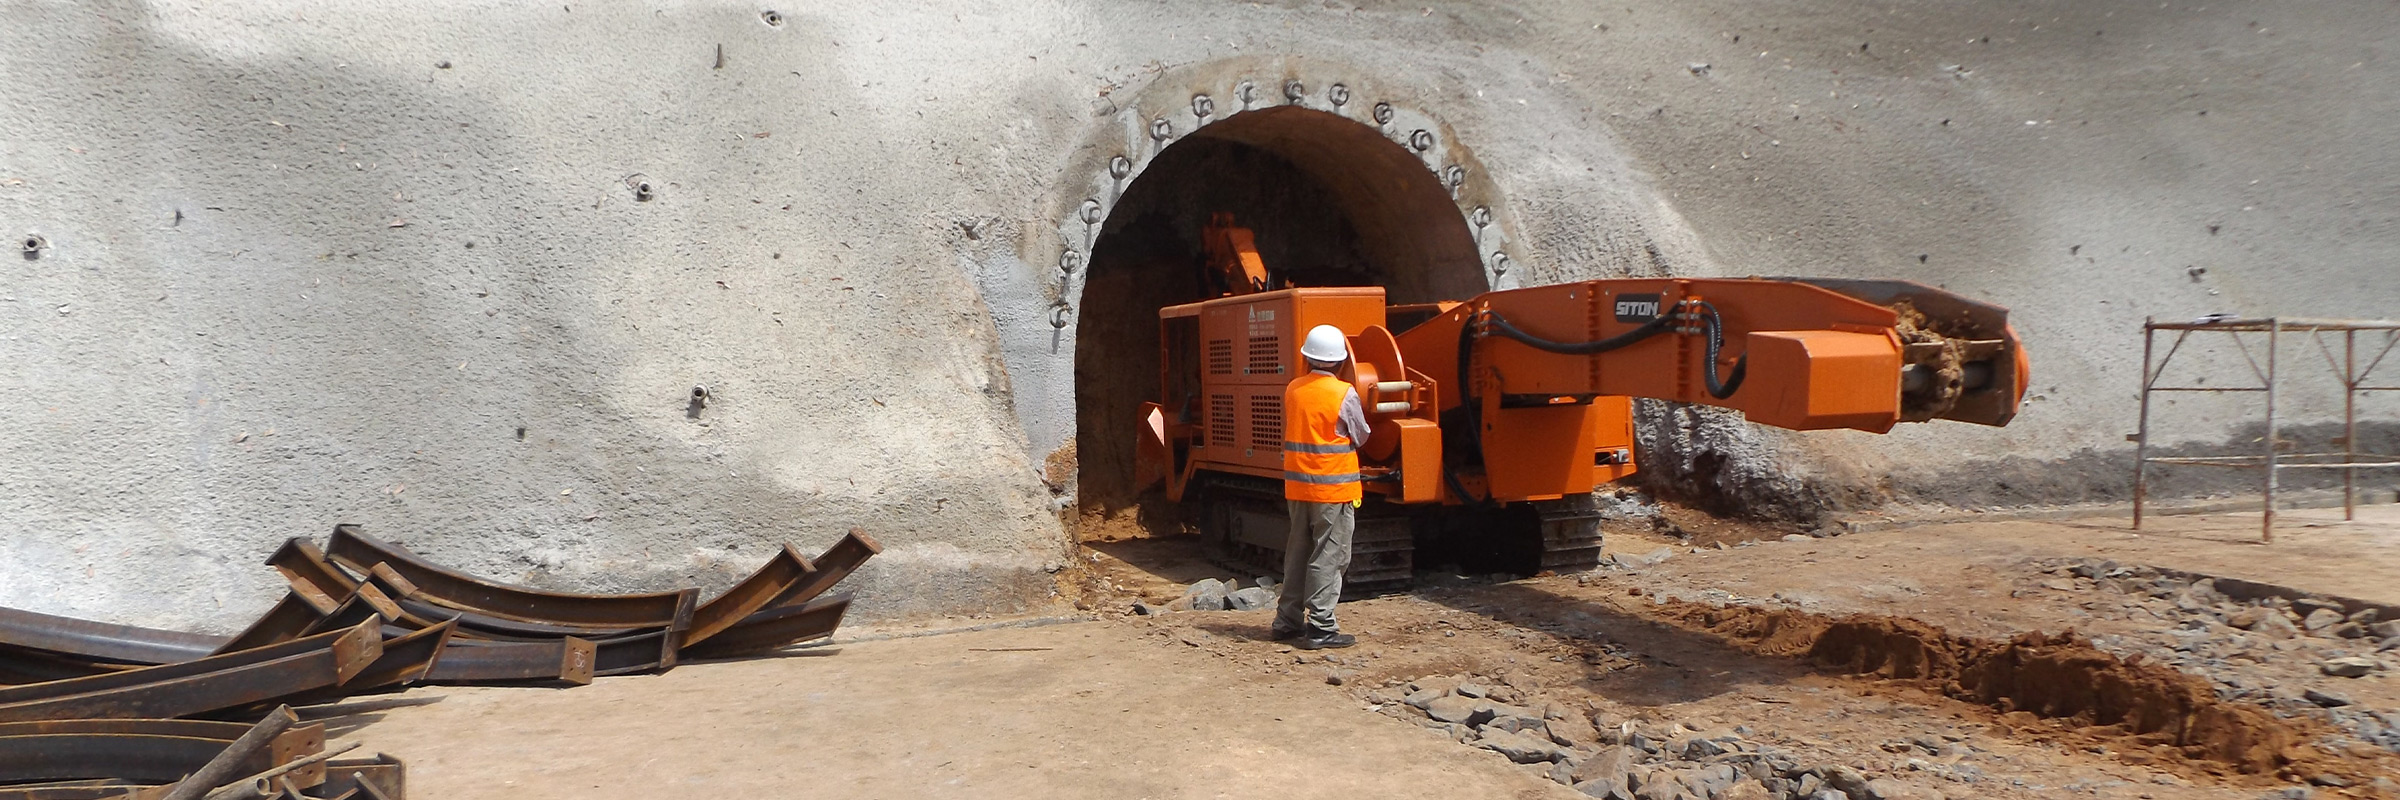 Northern Collector Tunnel Kenya